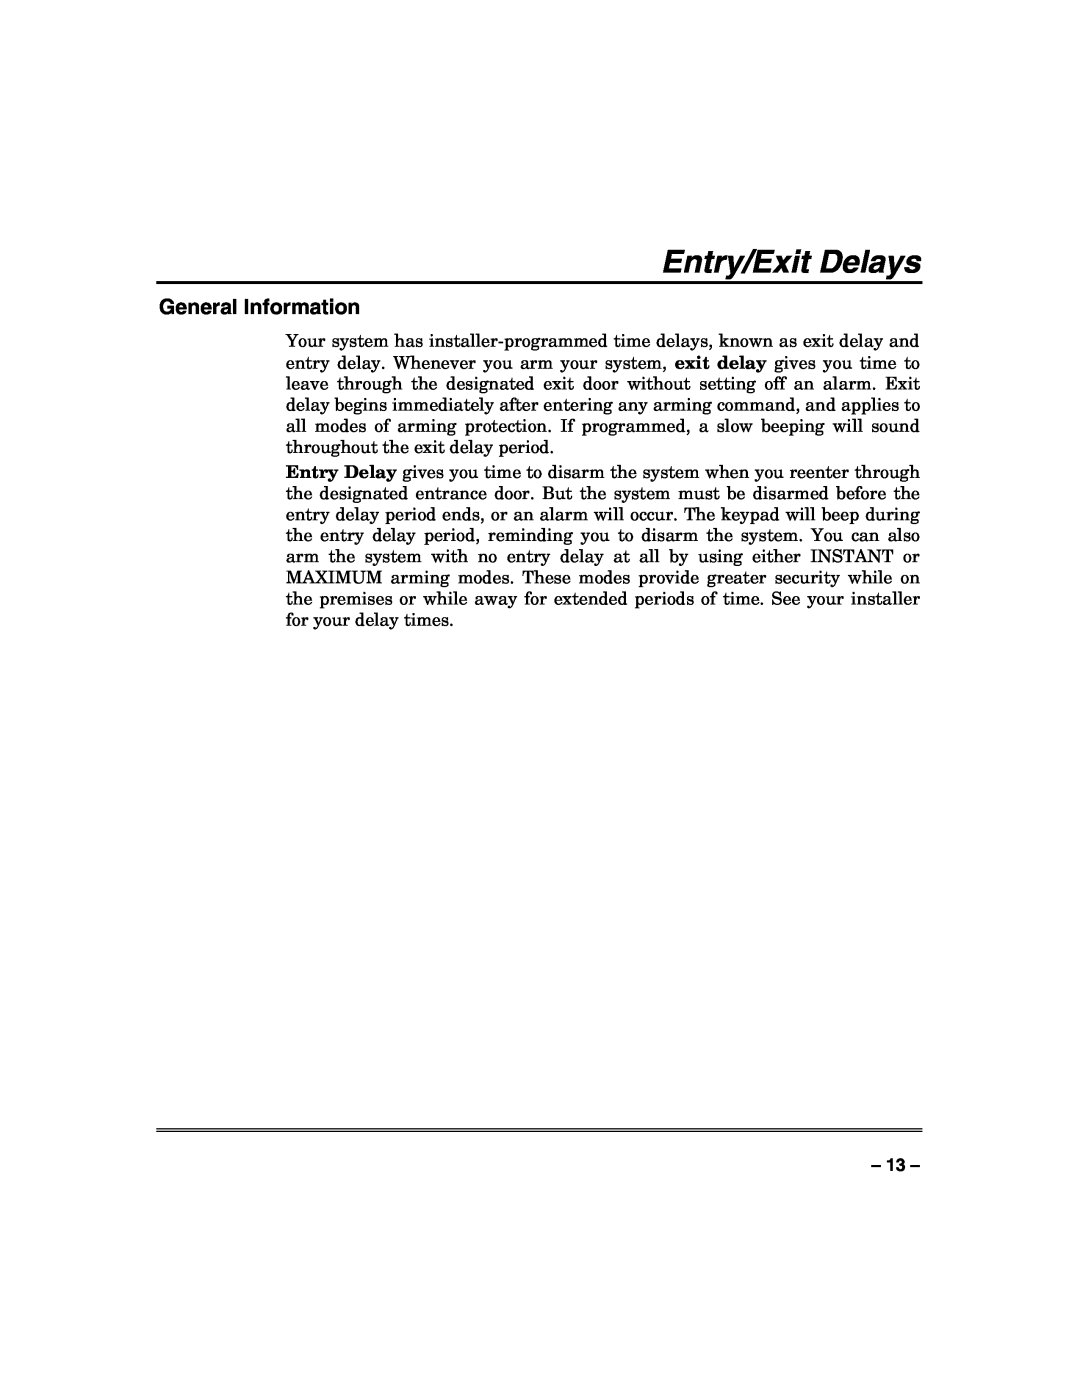 Honeywell N7003V3 manual Entry/Exit Delays, General Information 